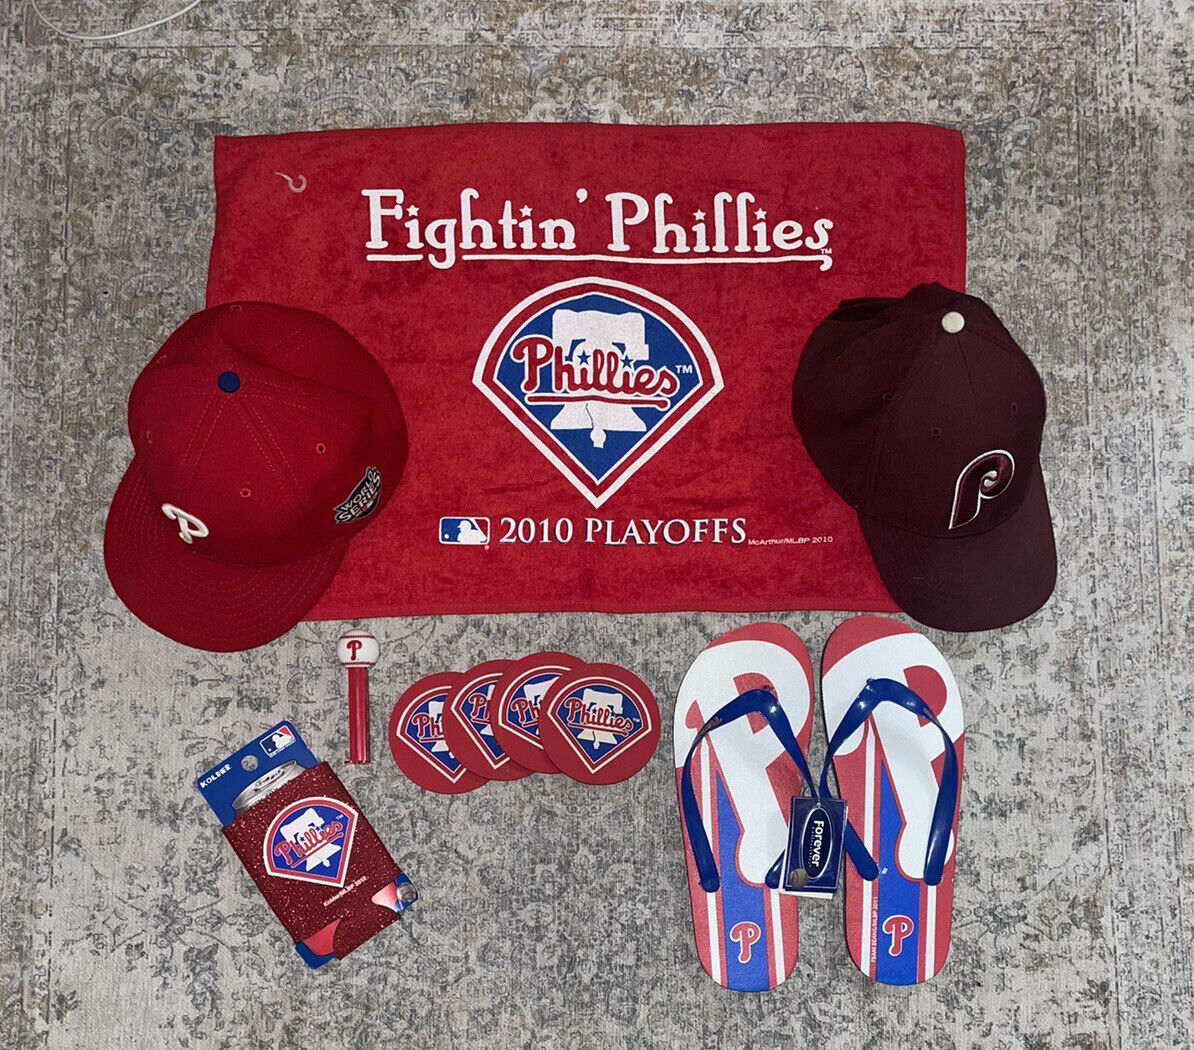 MLB Philadelphia Phillies Merchandise- Bundled Deal - Must Purchase Everything 